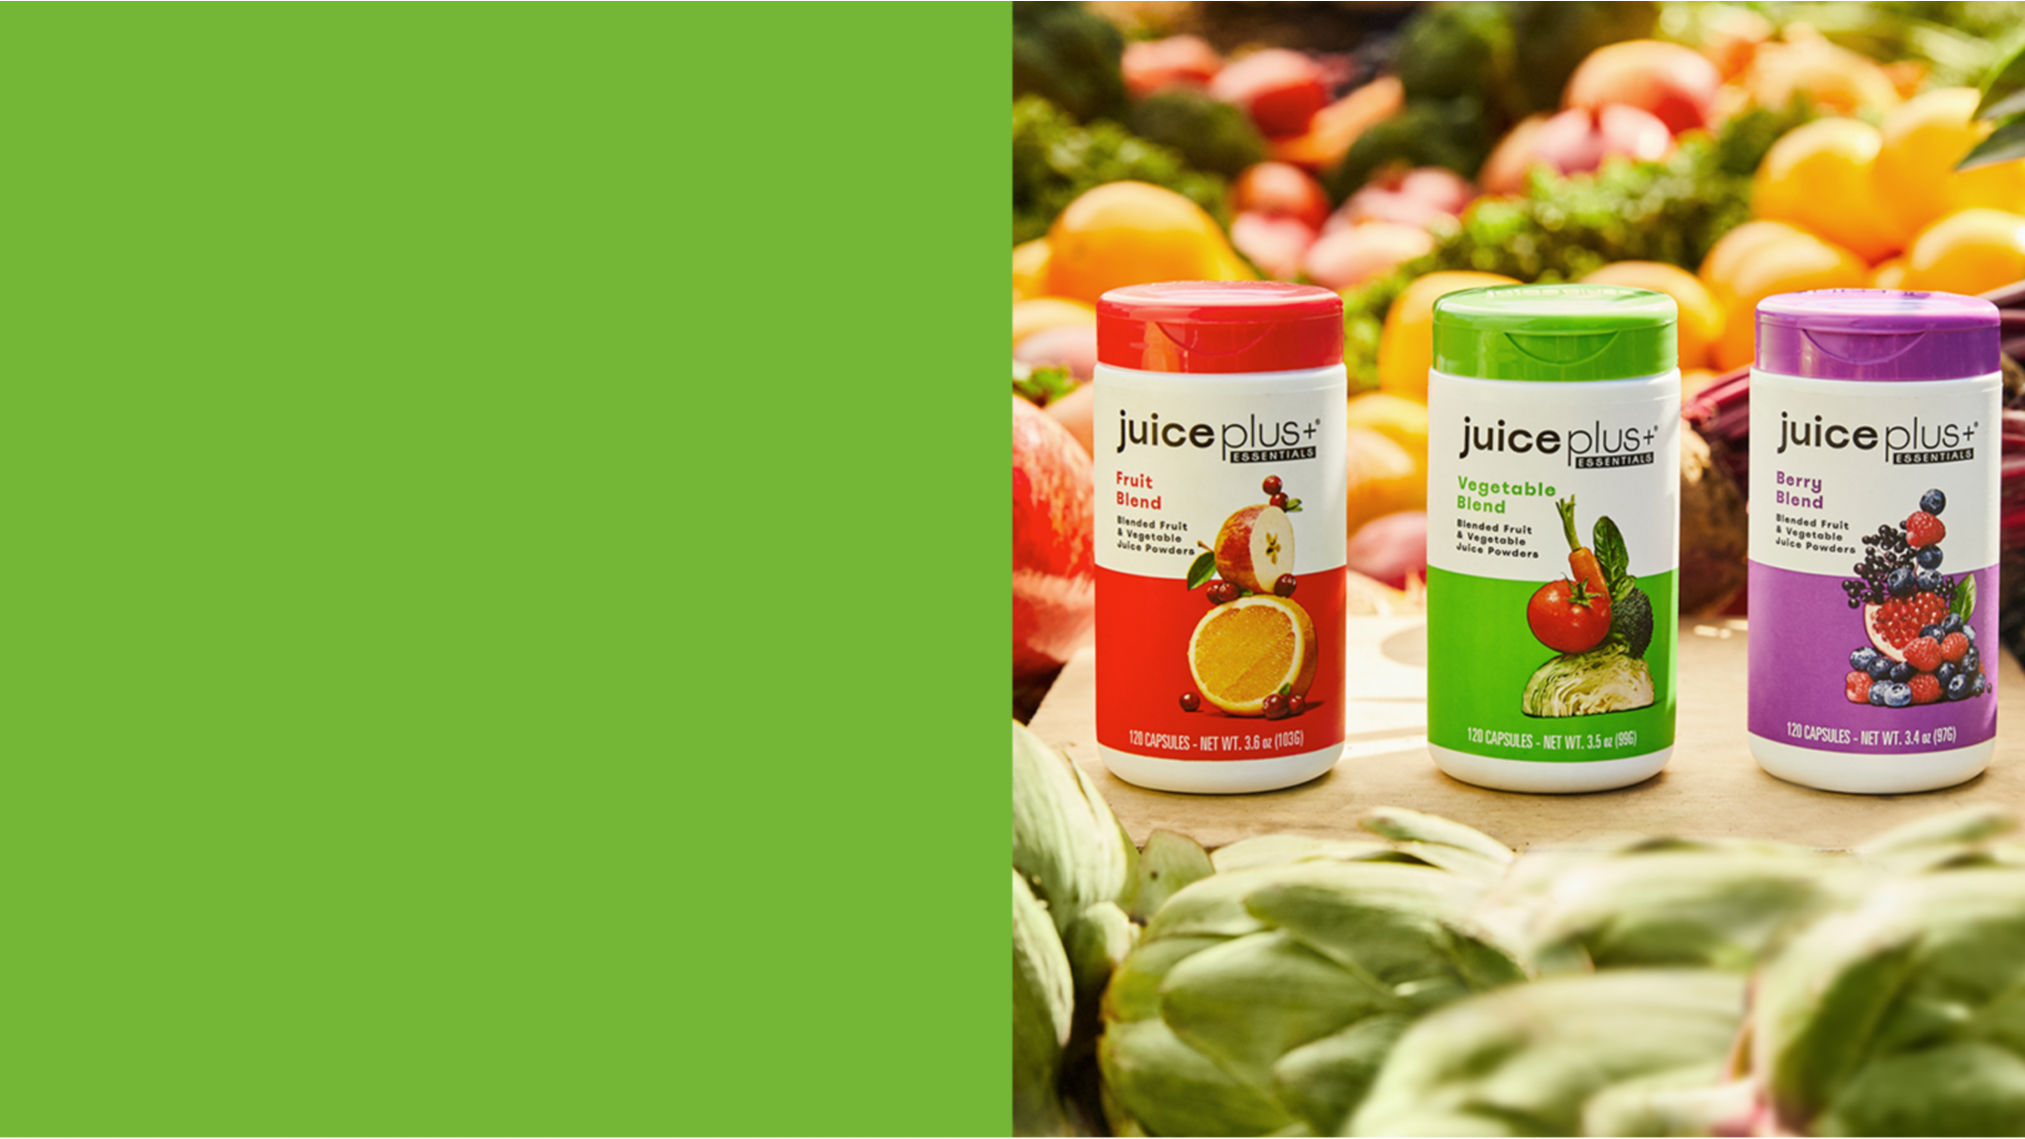 Juiceplus+ Homepage Essentials Fruit, Vegetable and Berry Blend capsules